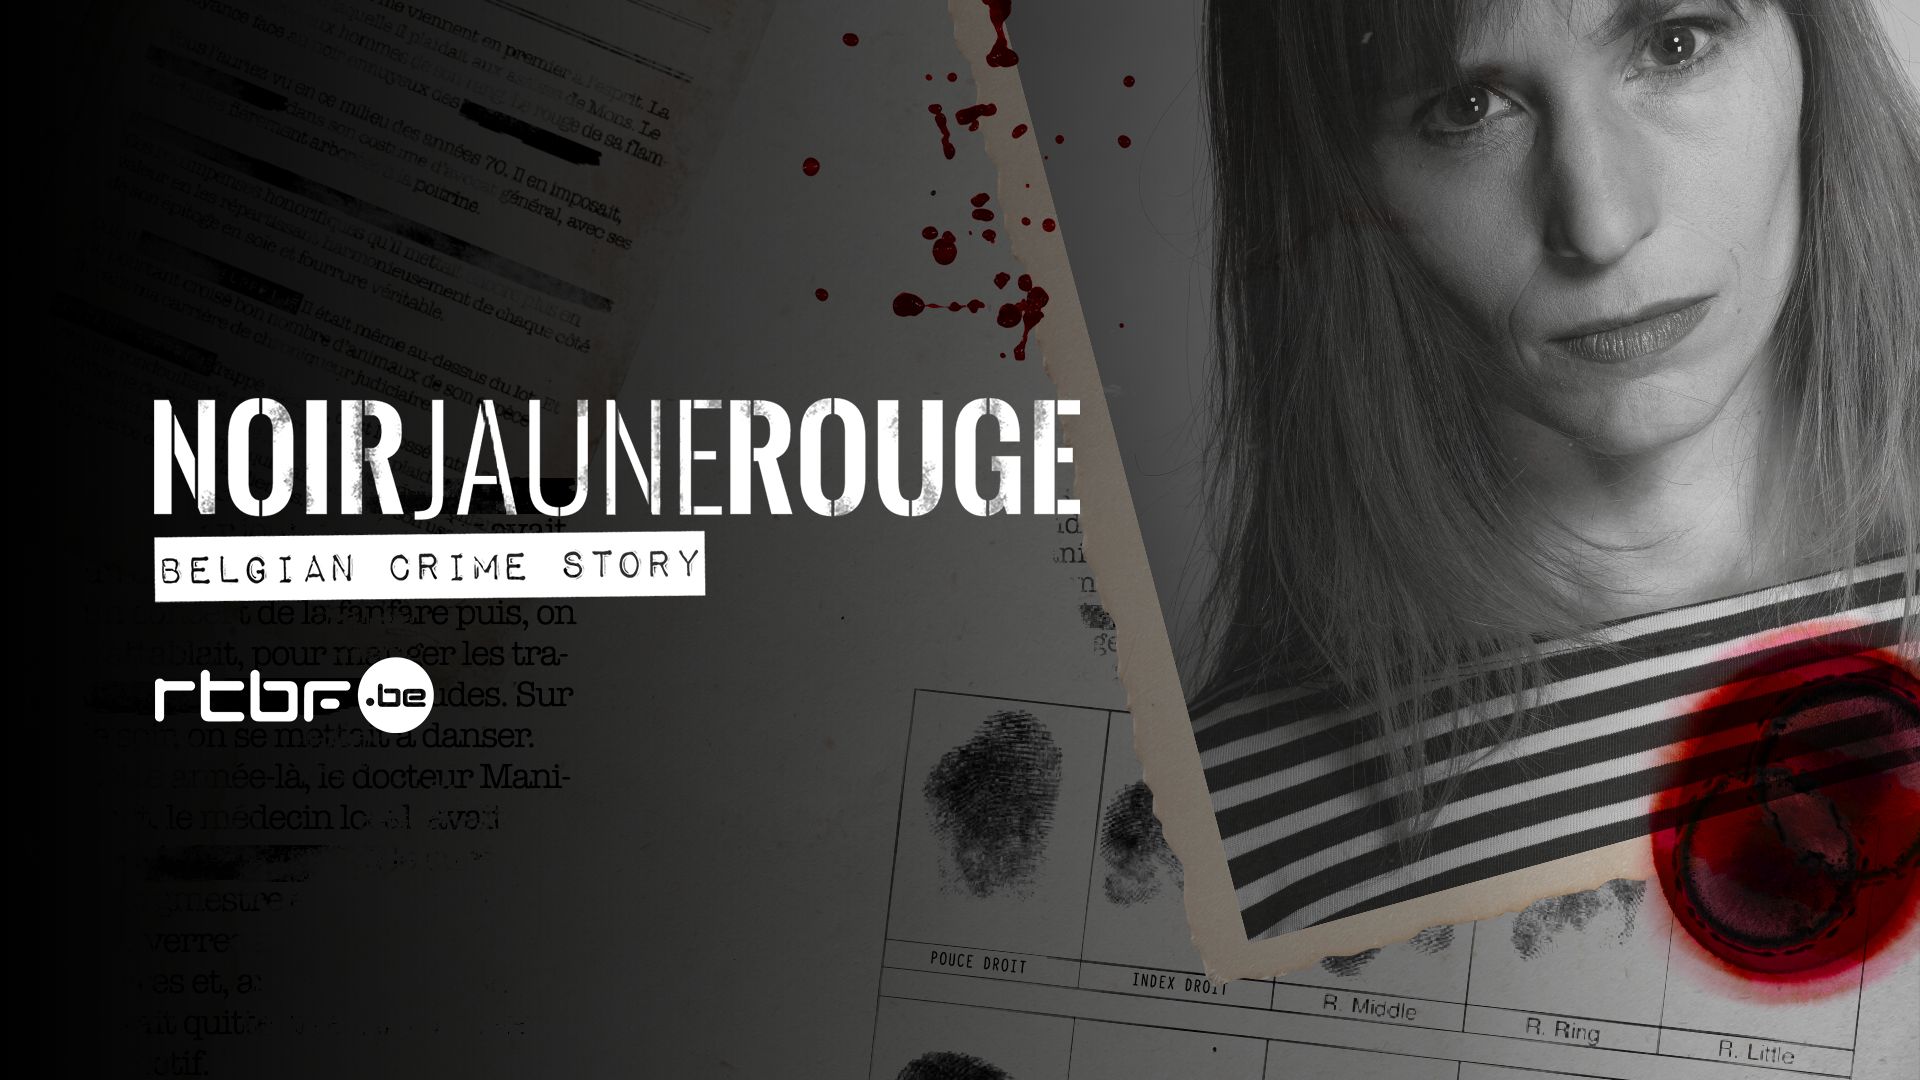 Noir Jaune Rouge - Belgian Crime Story